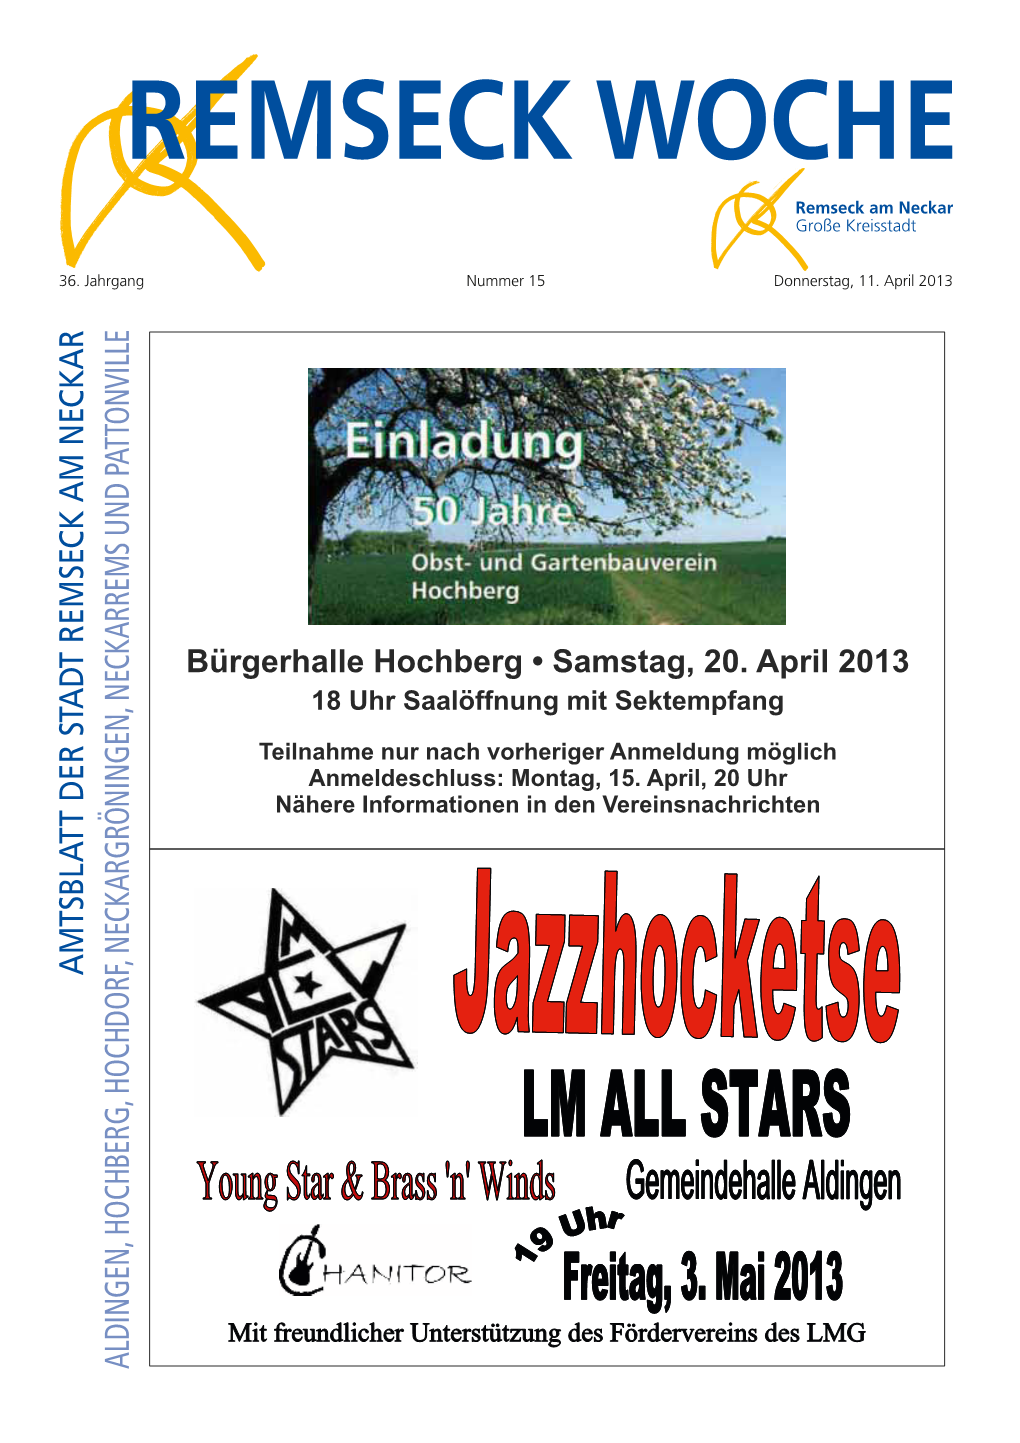 Bürgerhalle Hochberg • Samstag, 20. April 2013 18 Uhr Saalöffnung Mit Sektempfang